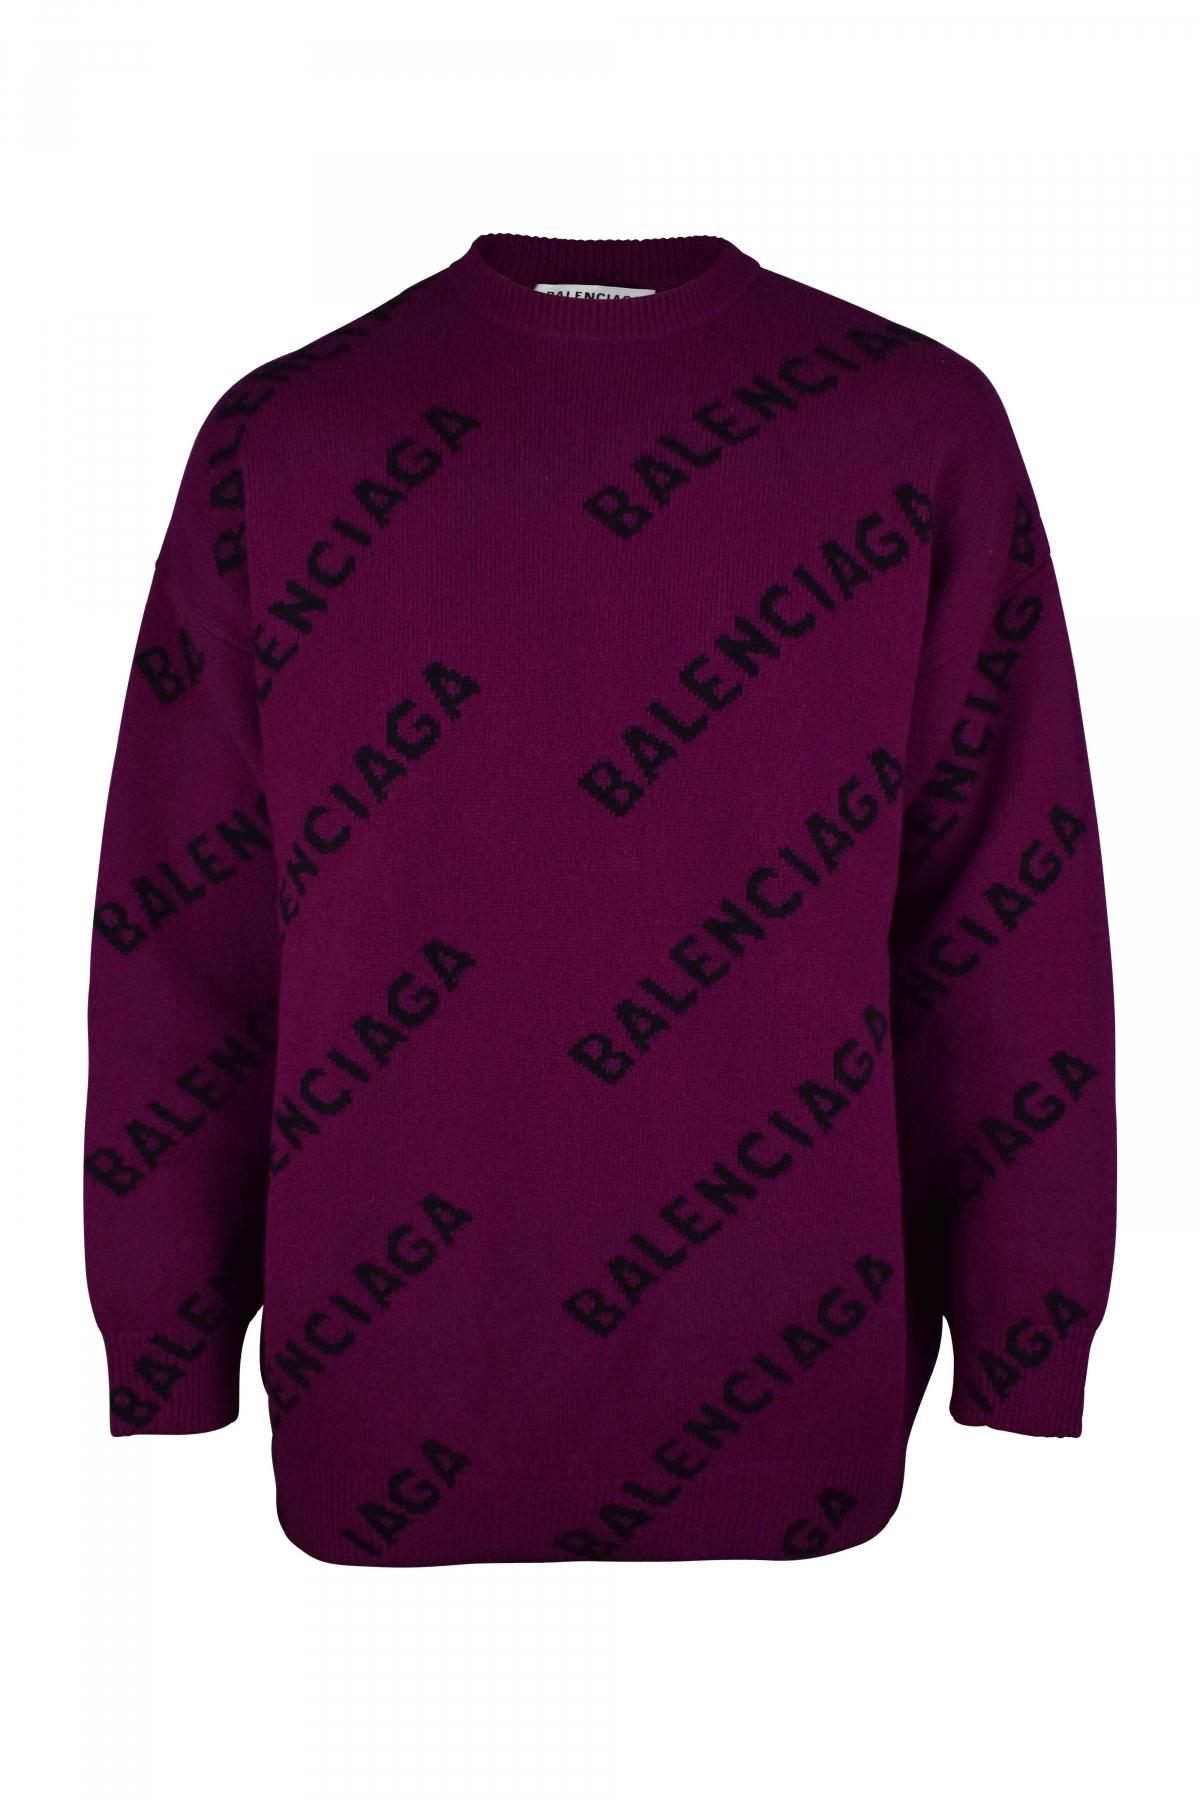 Balenciaga Sweater in Purple for Men | Lyst